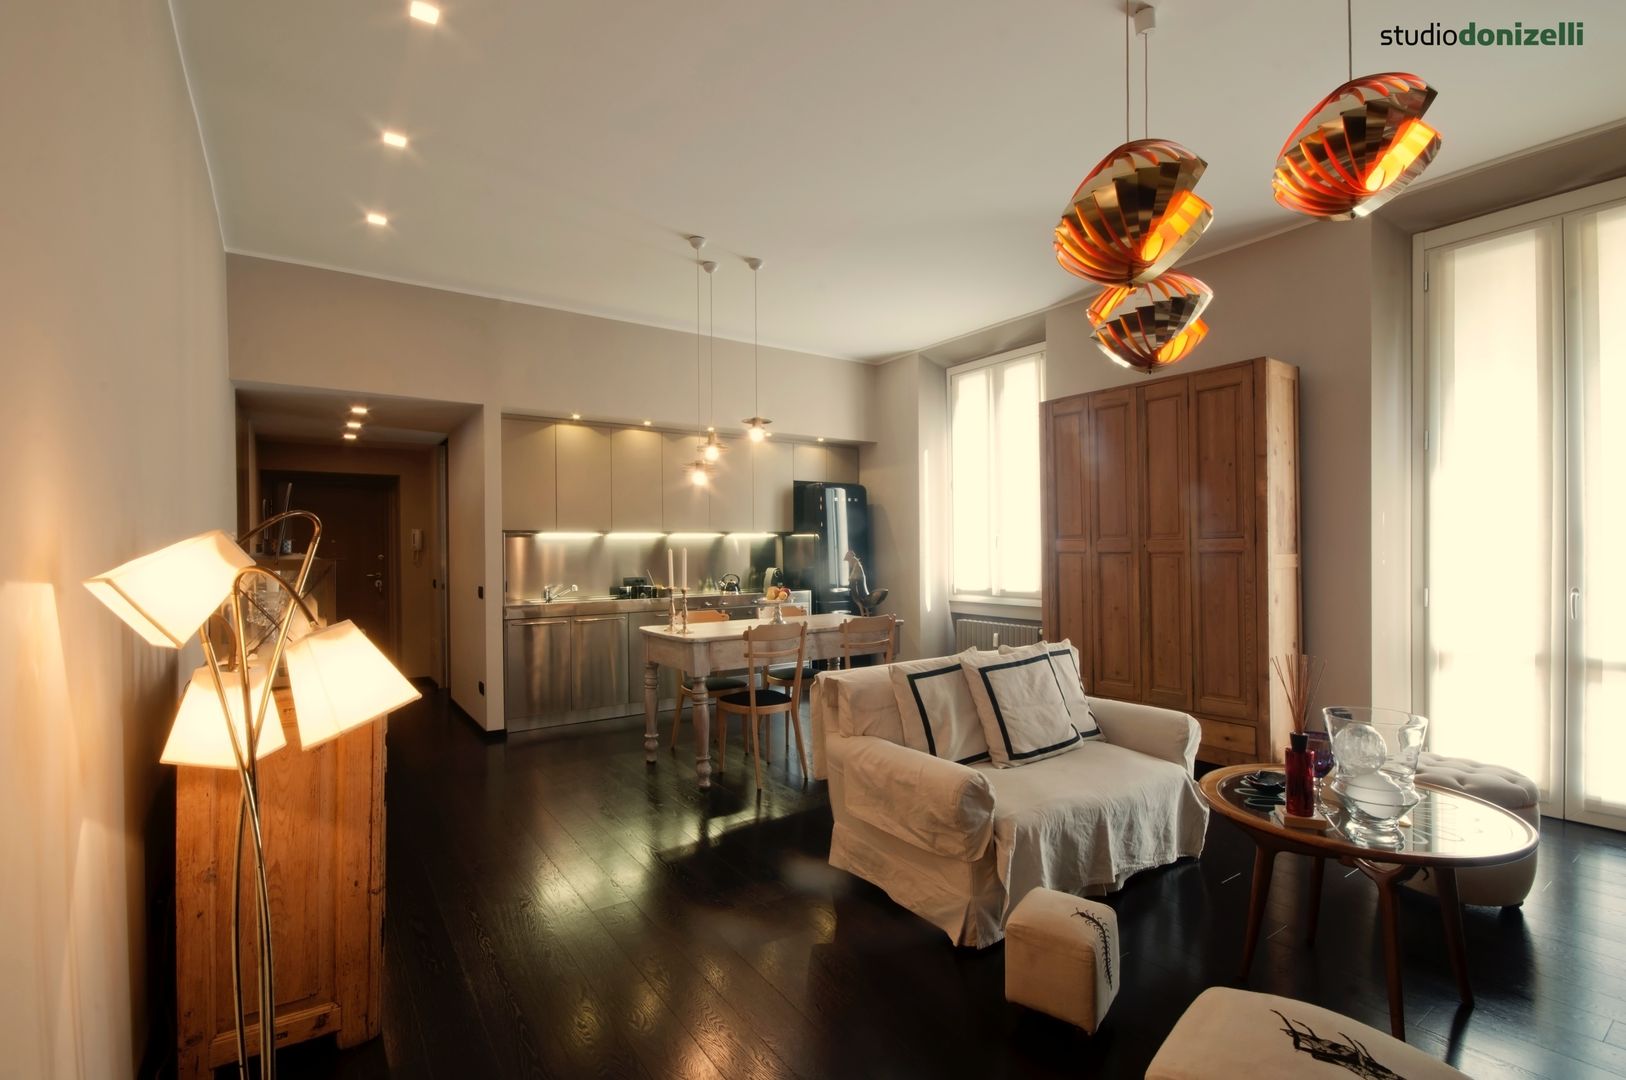 Casa Nadine, stile in low cost!, studiodonizelli studiodonizelli Modern living room Lighting